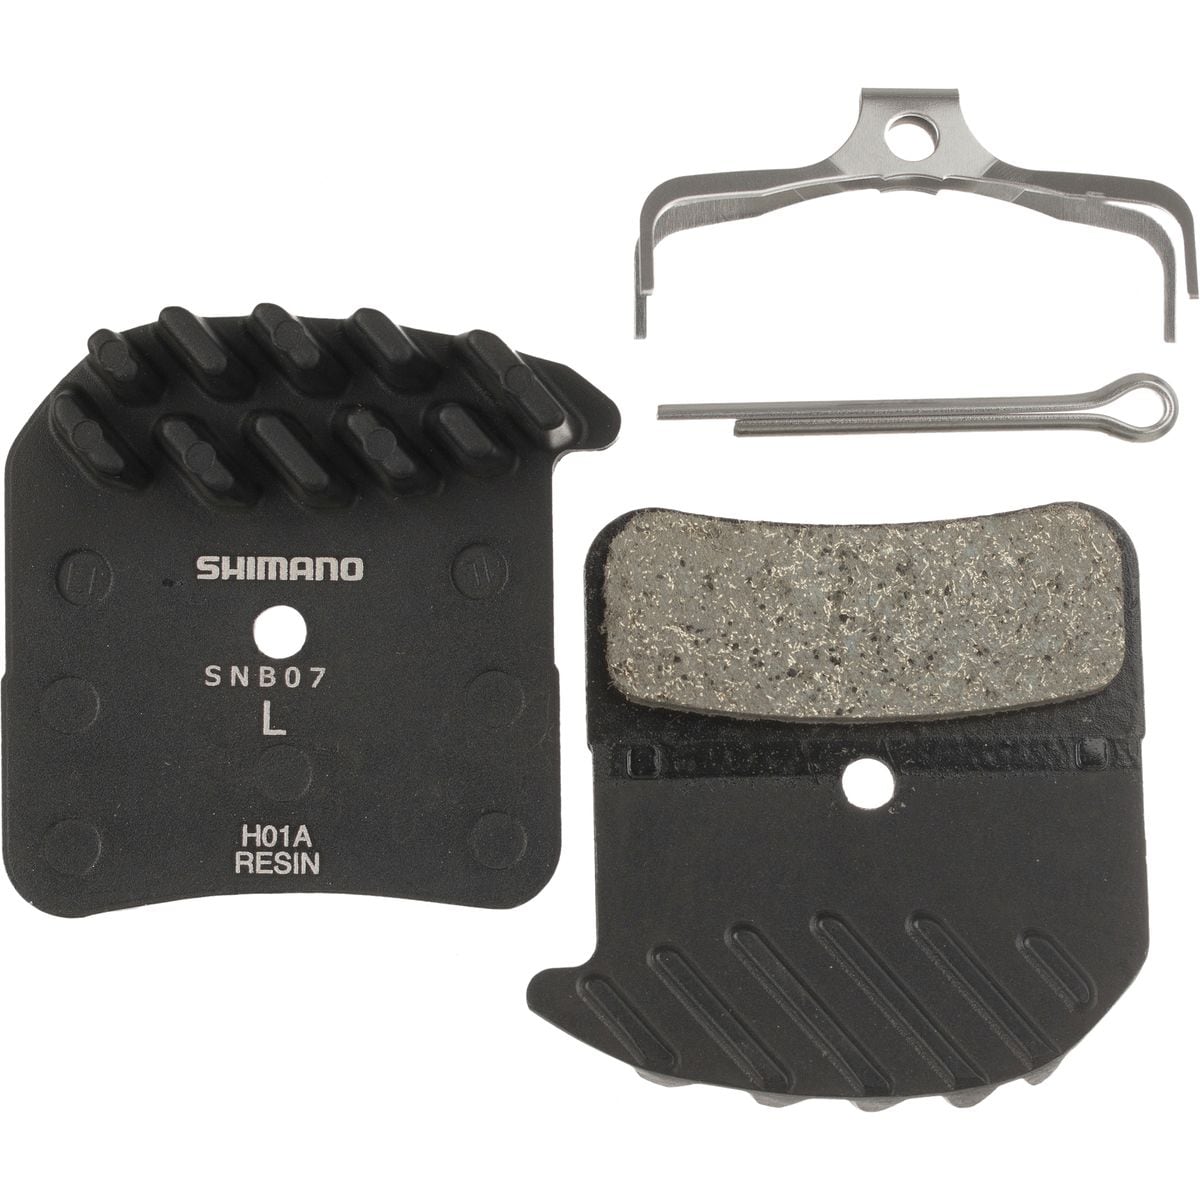 Shimano H01A Resin Disc Brake Pad